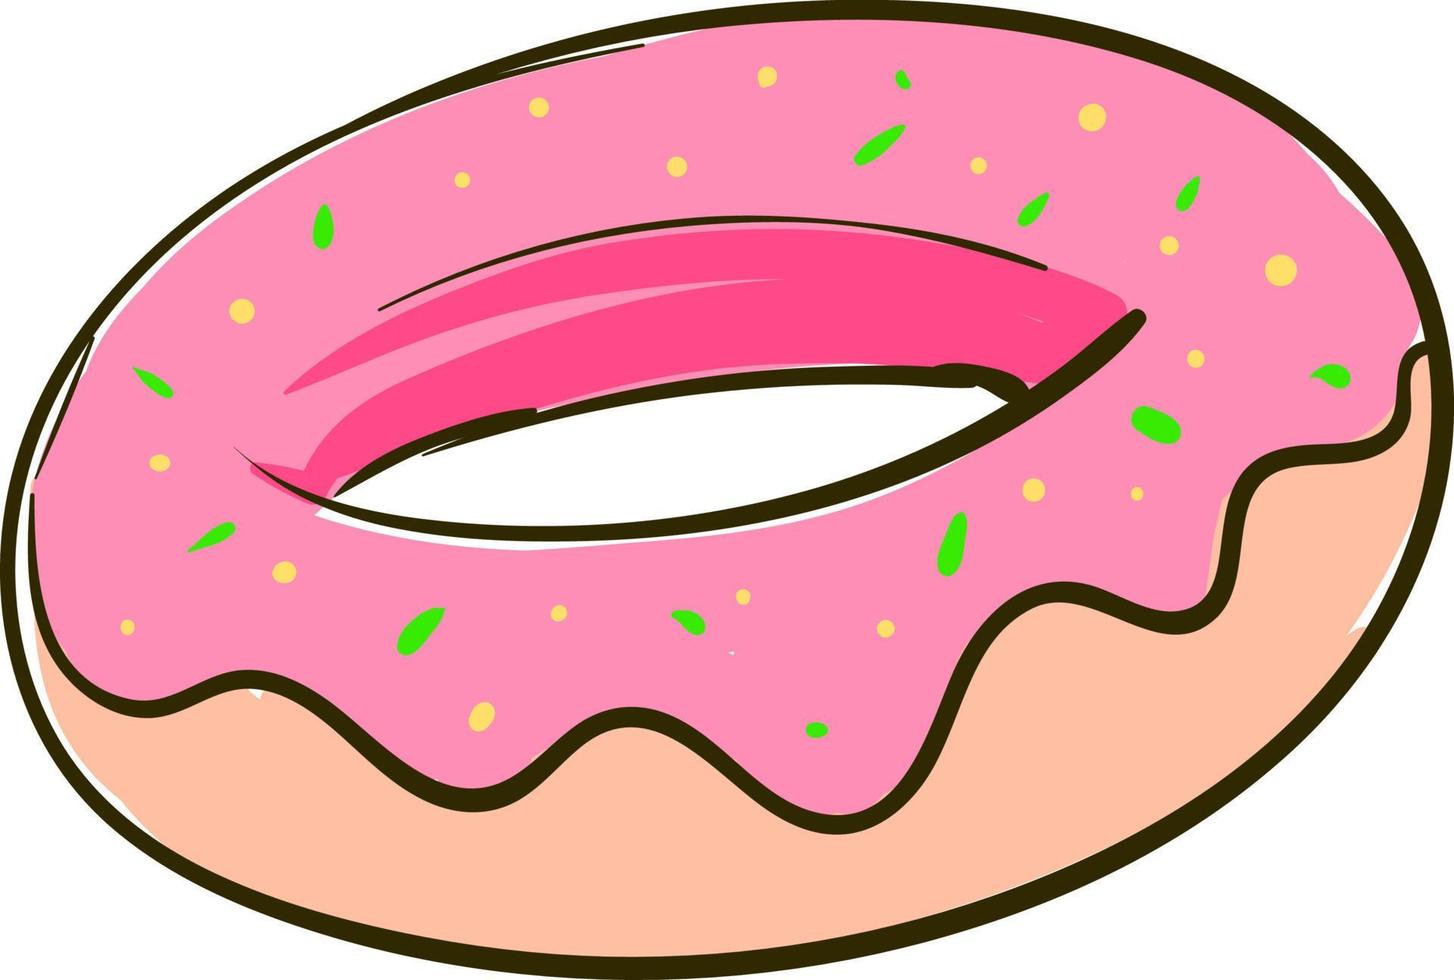 Pink donut, illustration, vector on white background